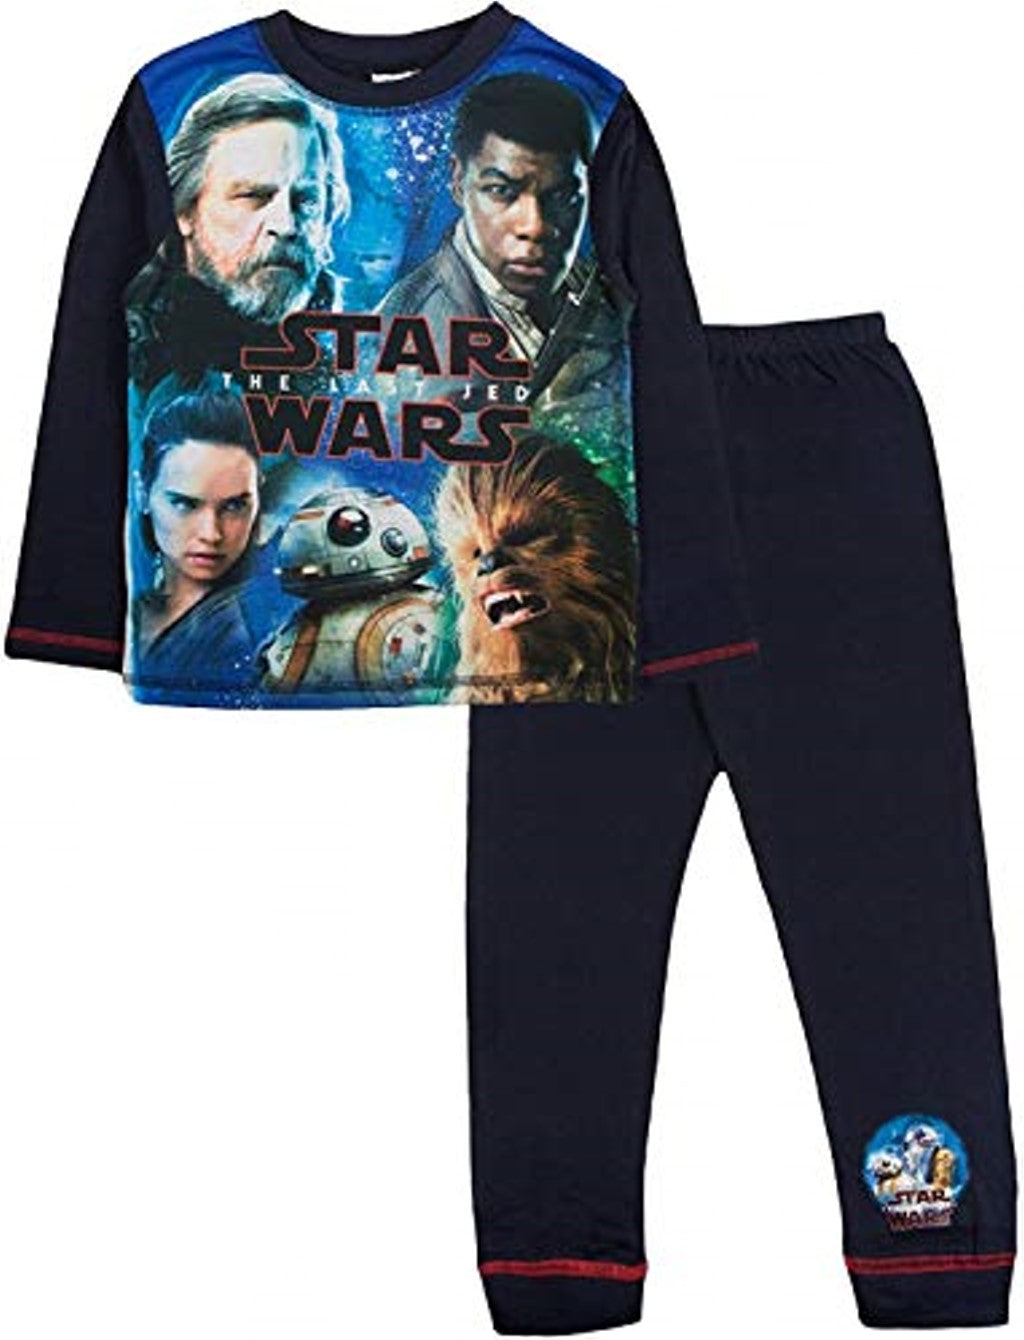 Star Wars "The Last Jedi" Boys Pyjamas 4-6 Years